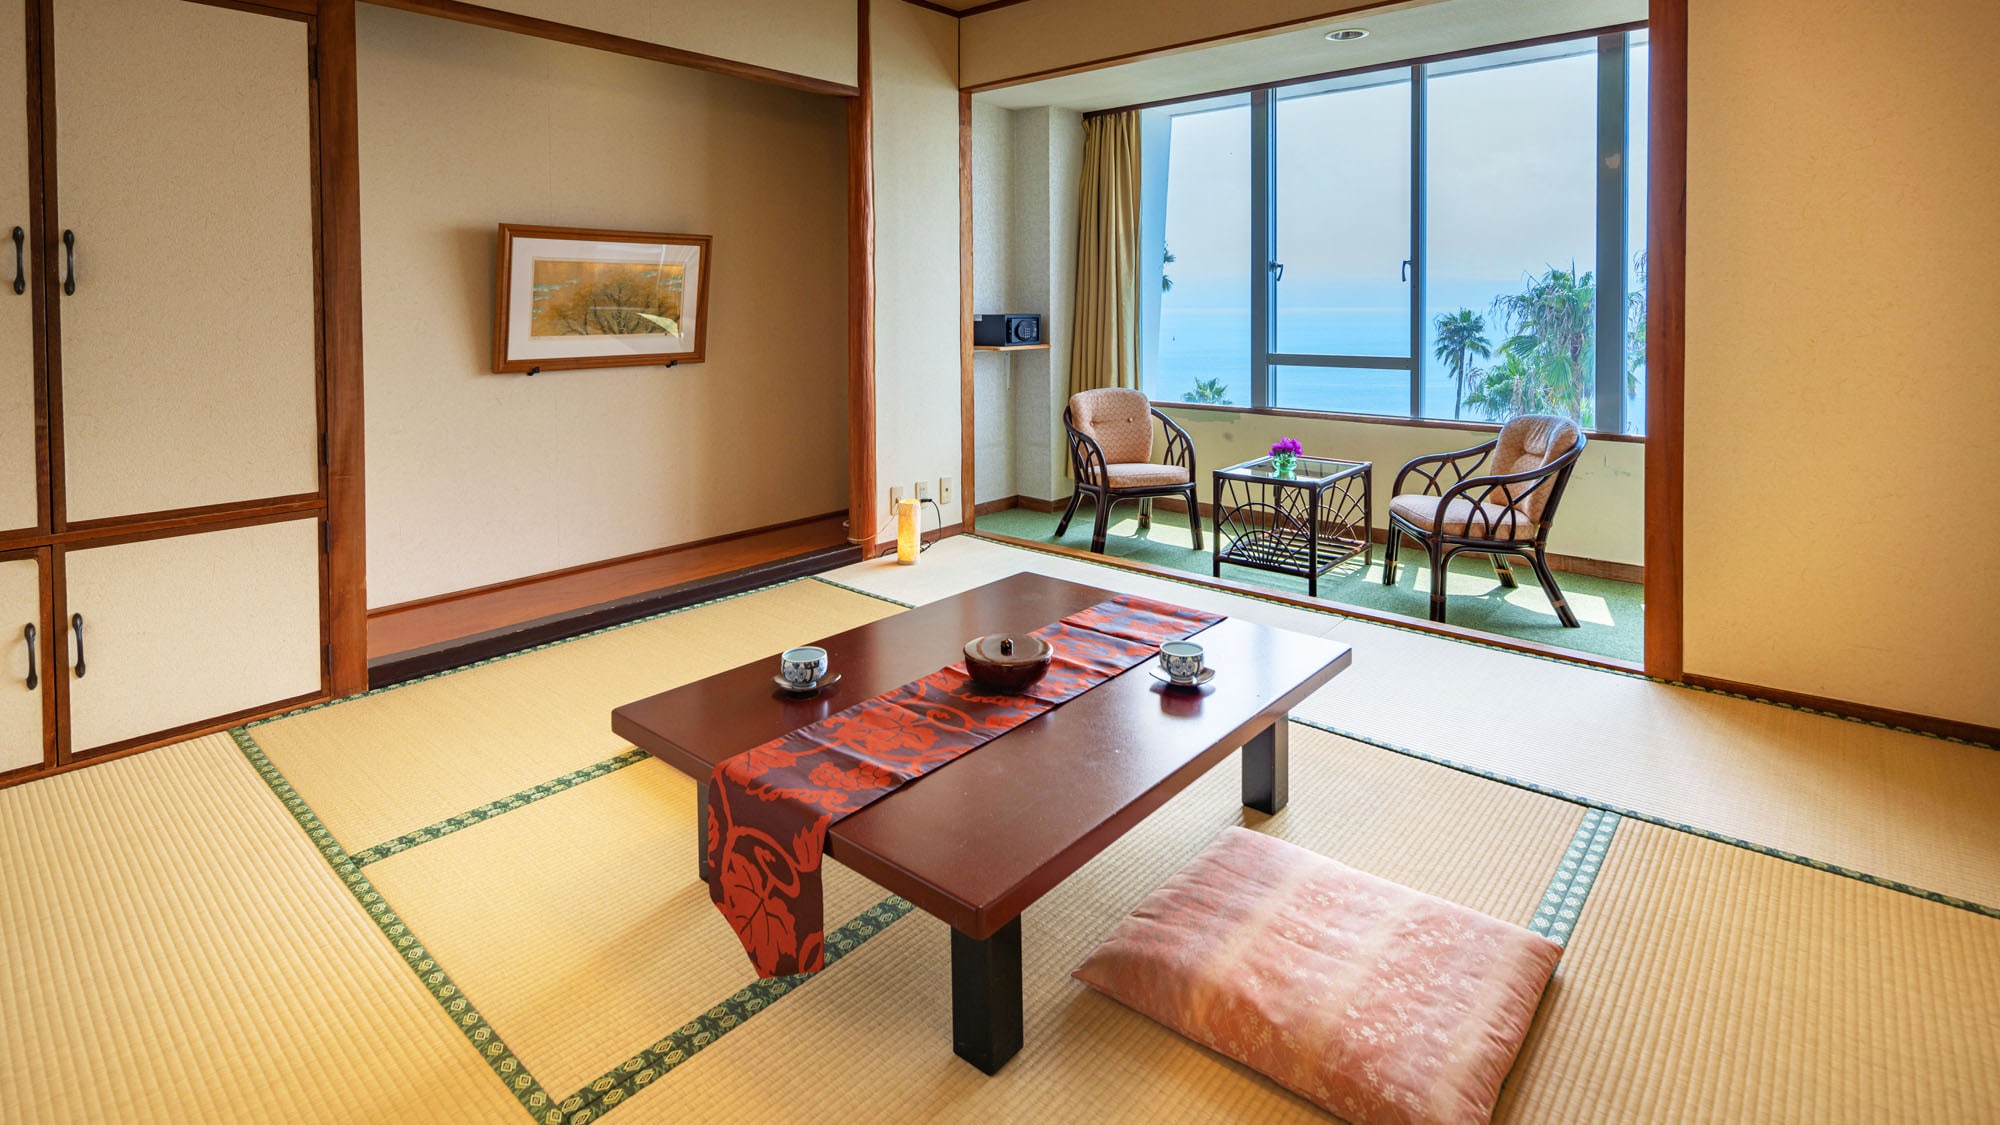 ■ Japanese-style room 8 tatami mats ■